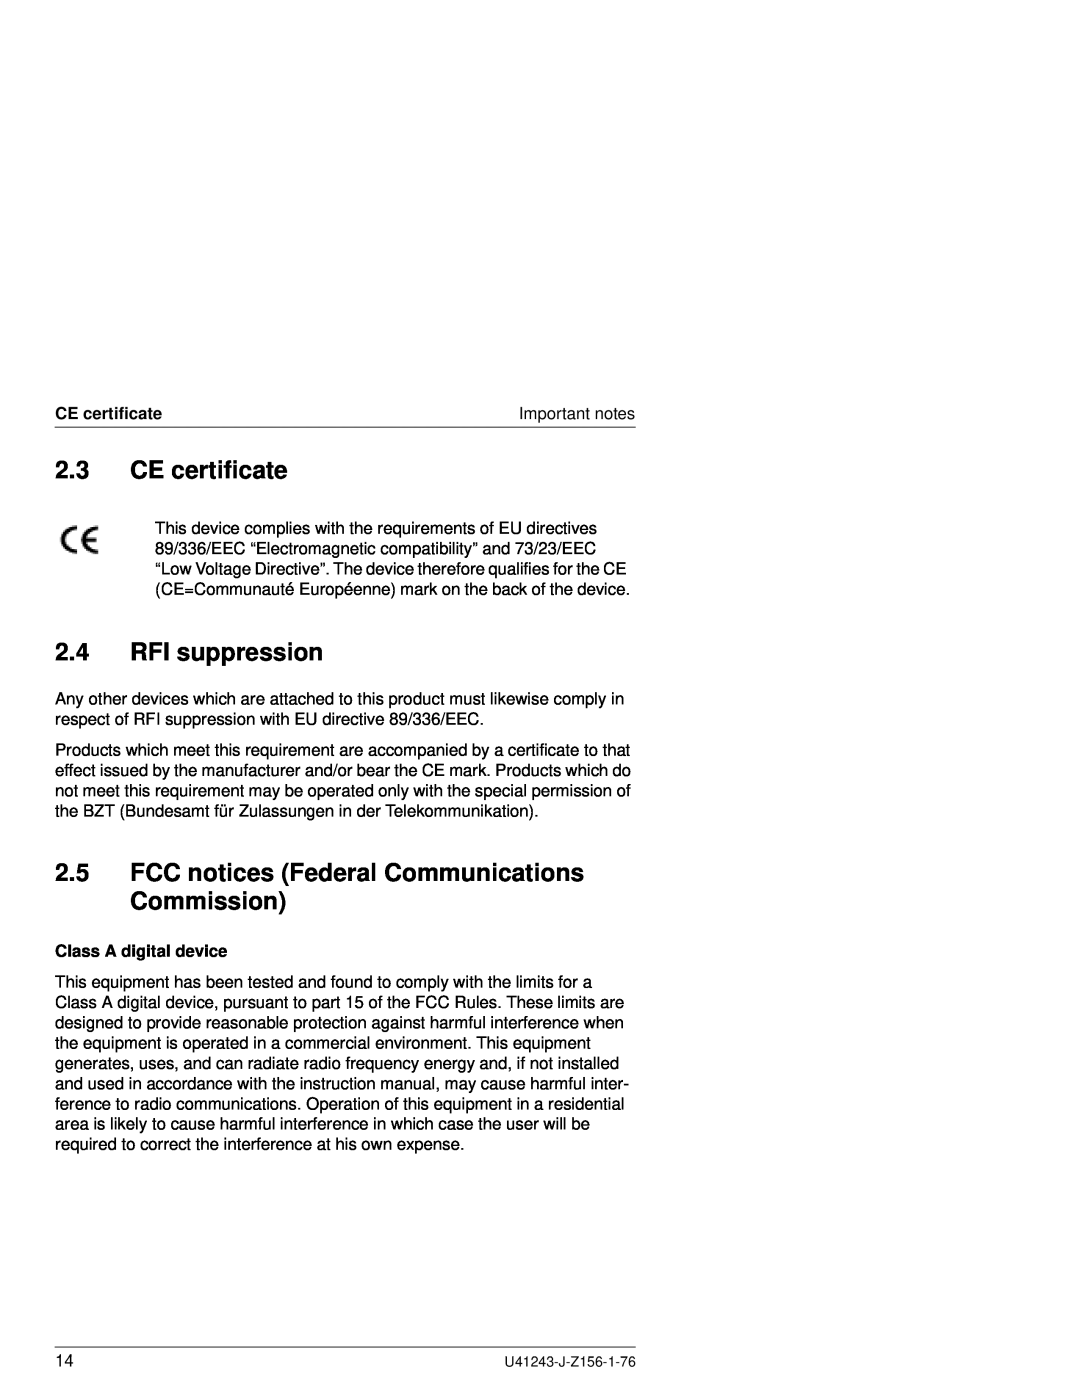 Fujitsu N800 manual CE certificate, RFI suppression, FCC notices Federal Communications Commission, Class A digital device 